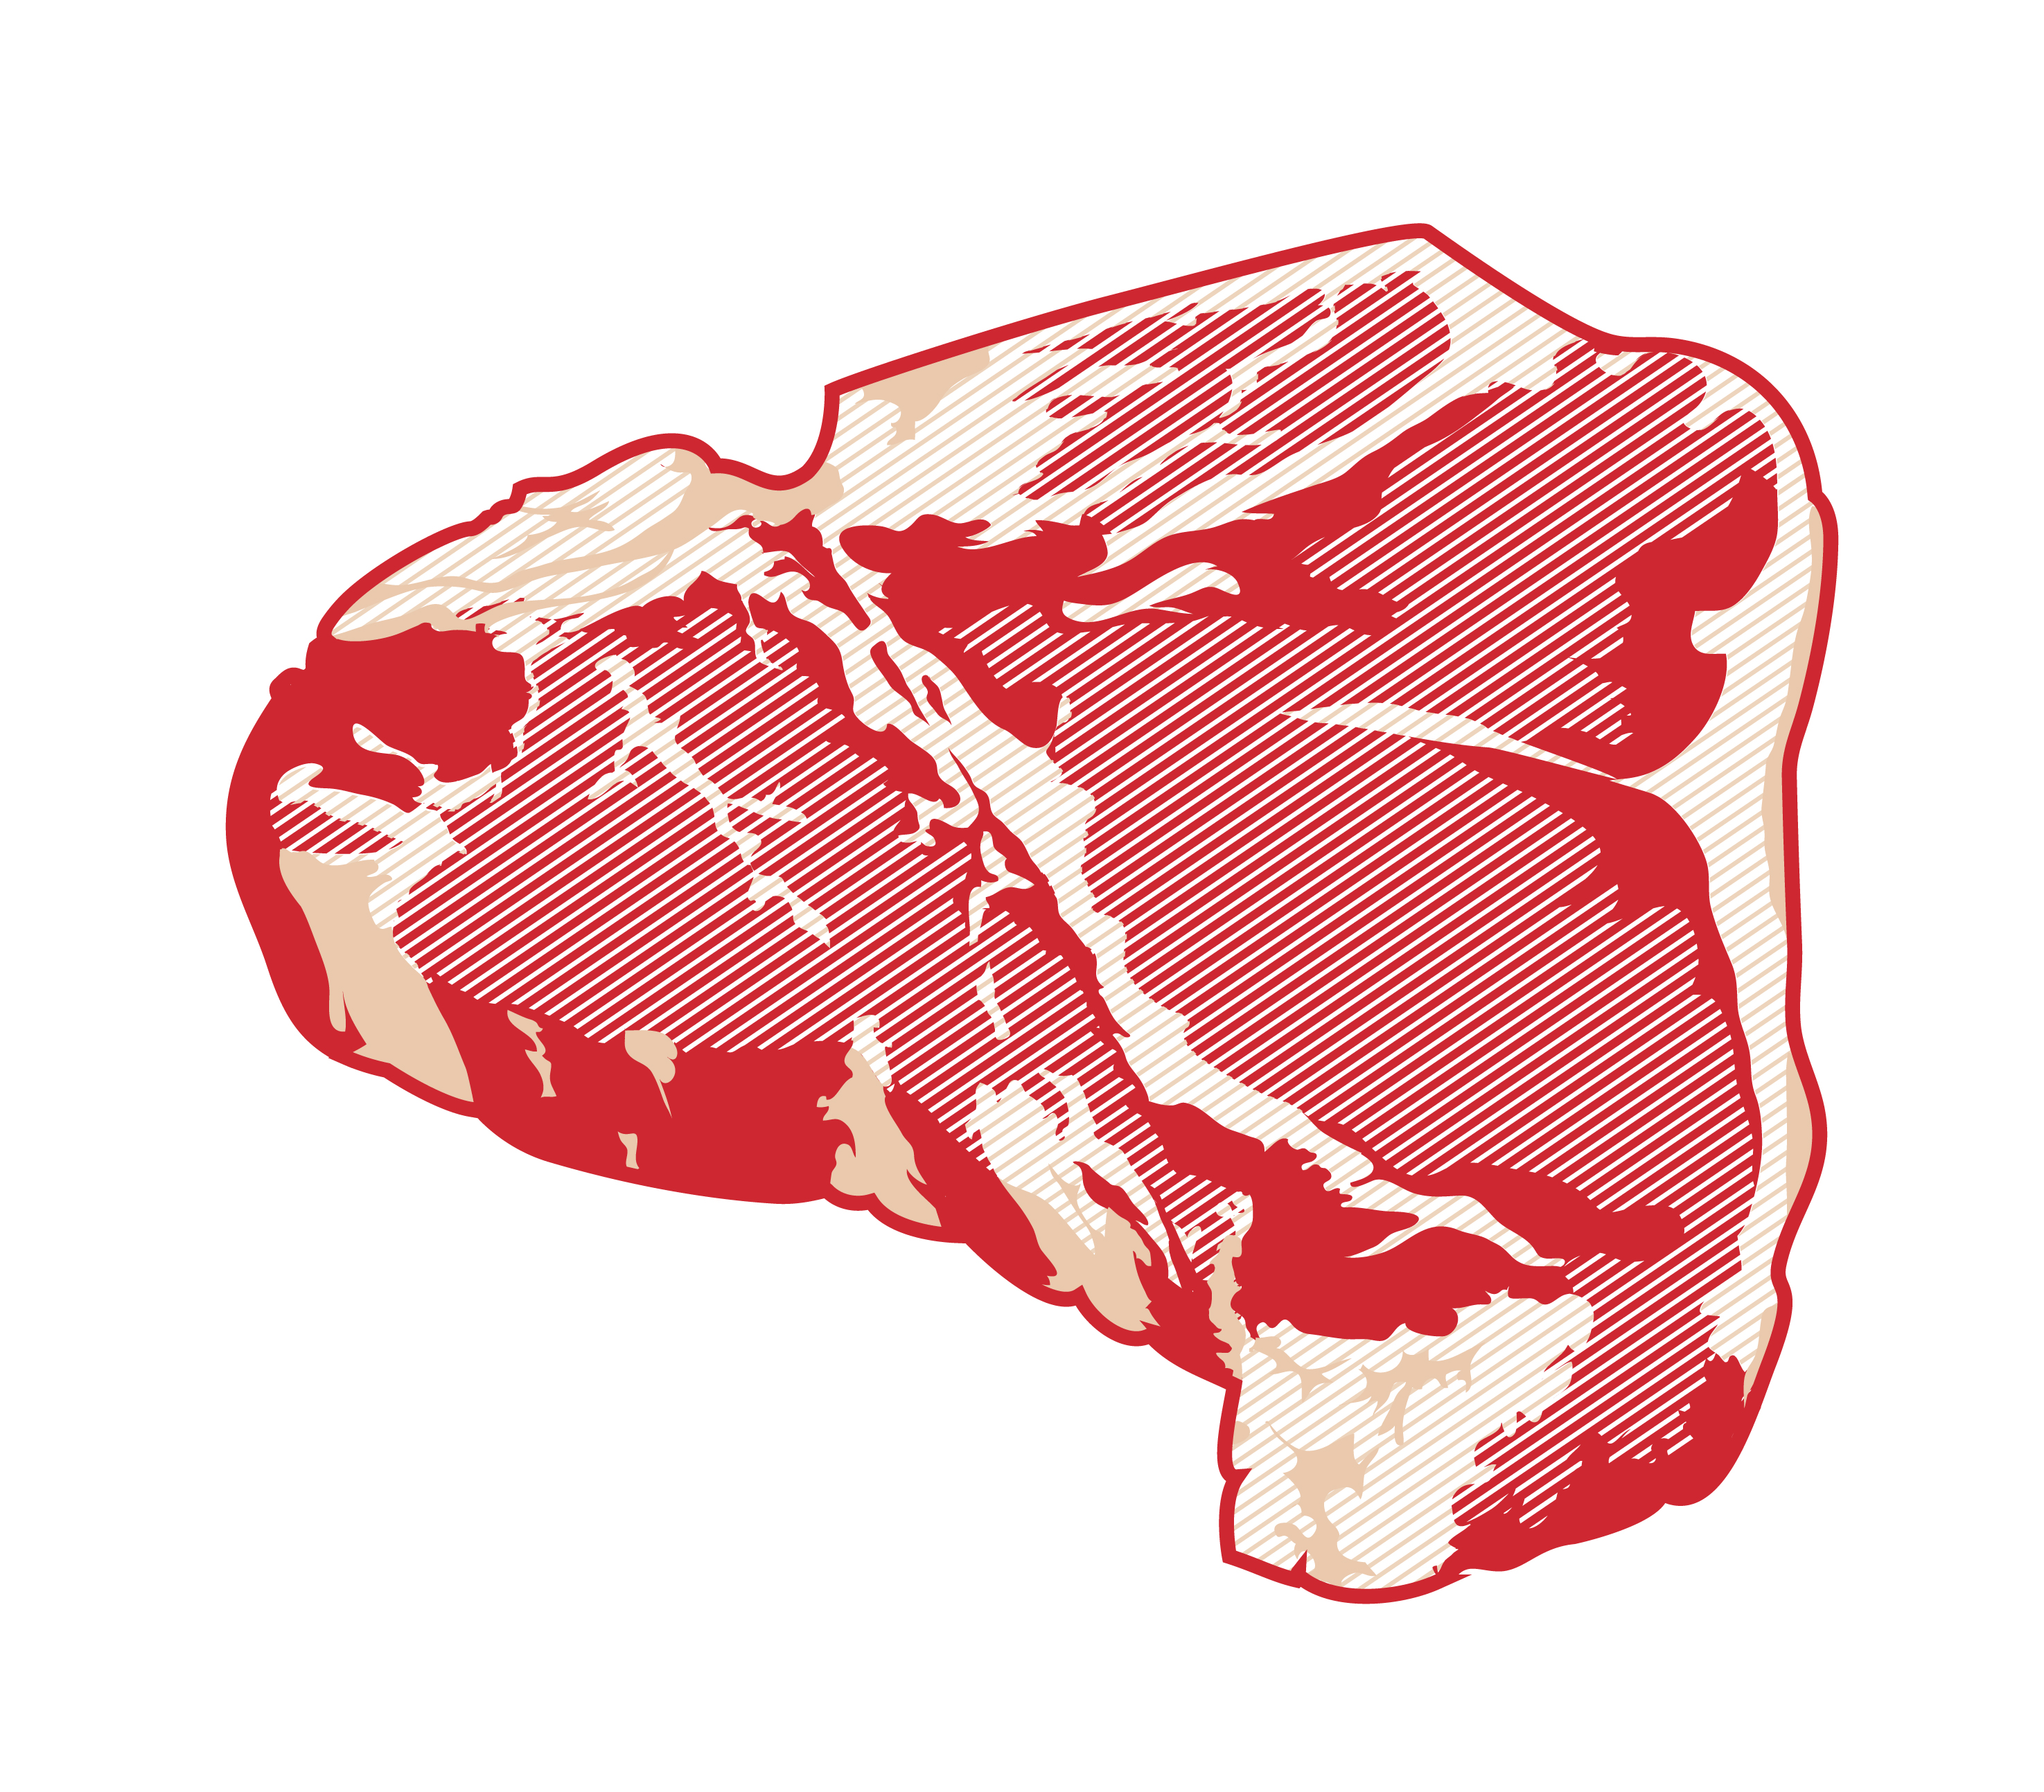 Steak clip art download image